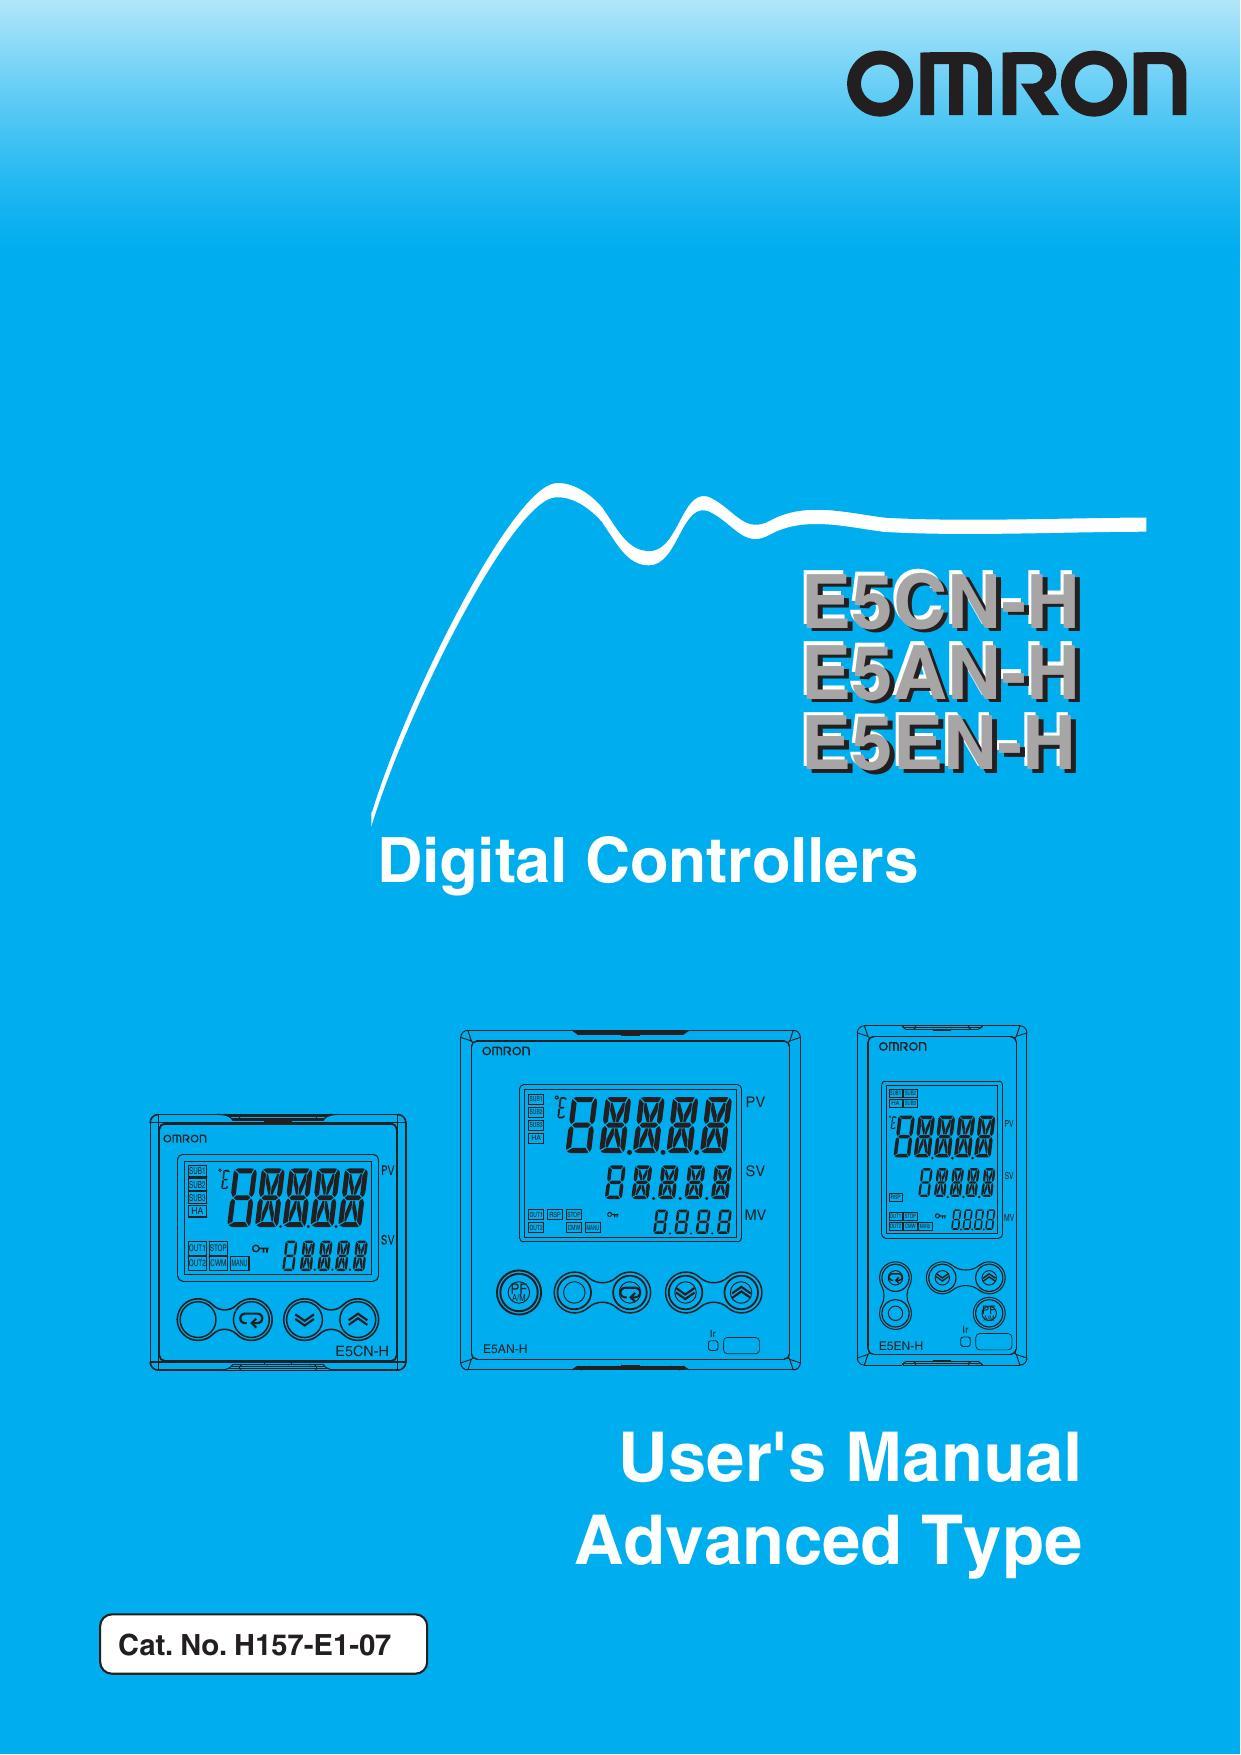 omron-e5cn-h-e5an-h-esen-h-digital-controllers-users-manual-advanced-type.pdf